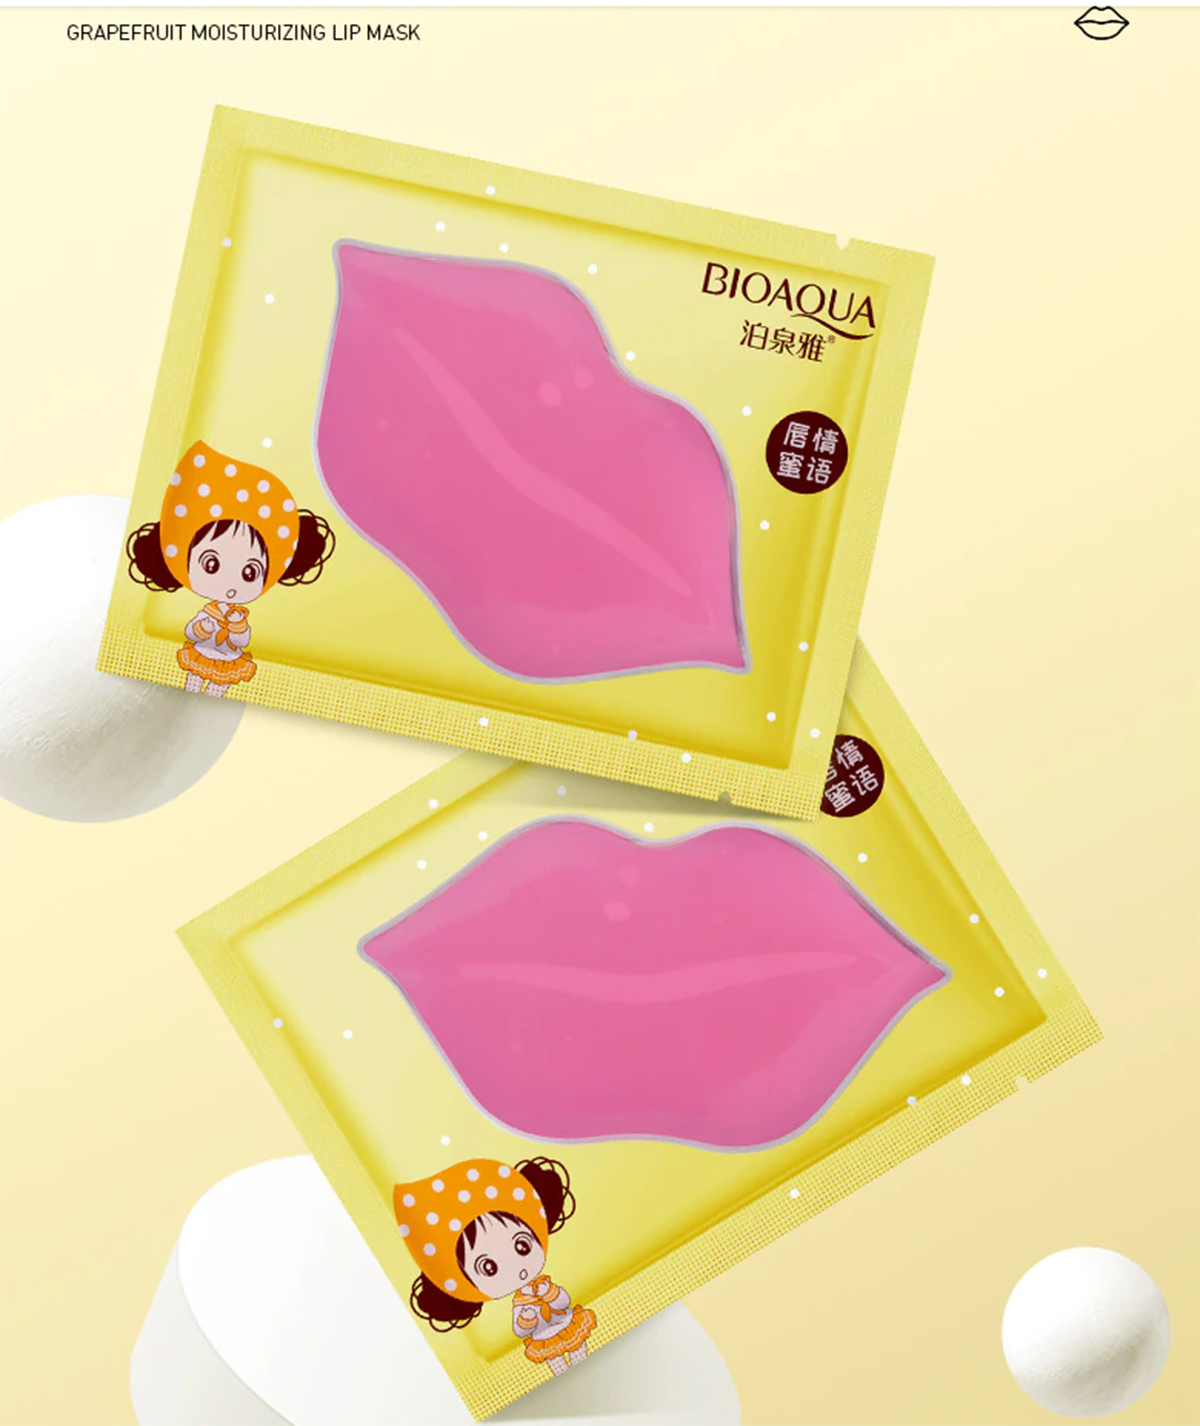 Bioaqua 1 Piece Grapefruit Moisturizing Crystal Lip Mask Bqy90744 8g ...